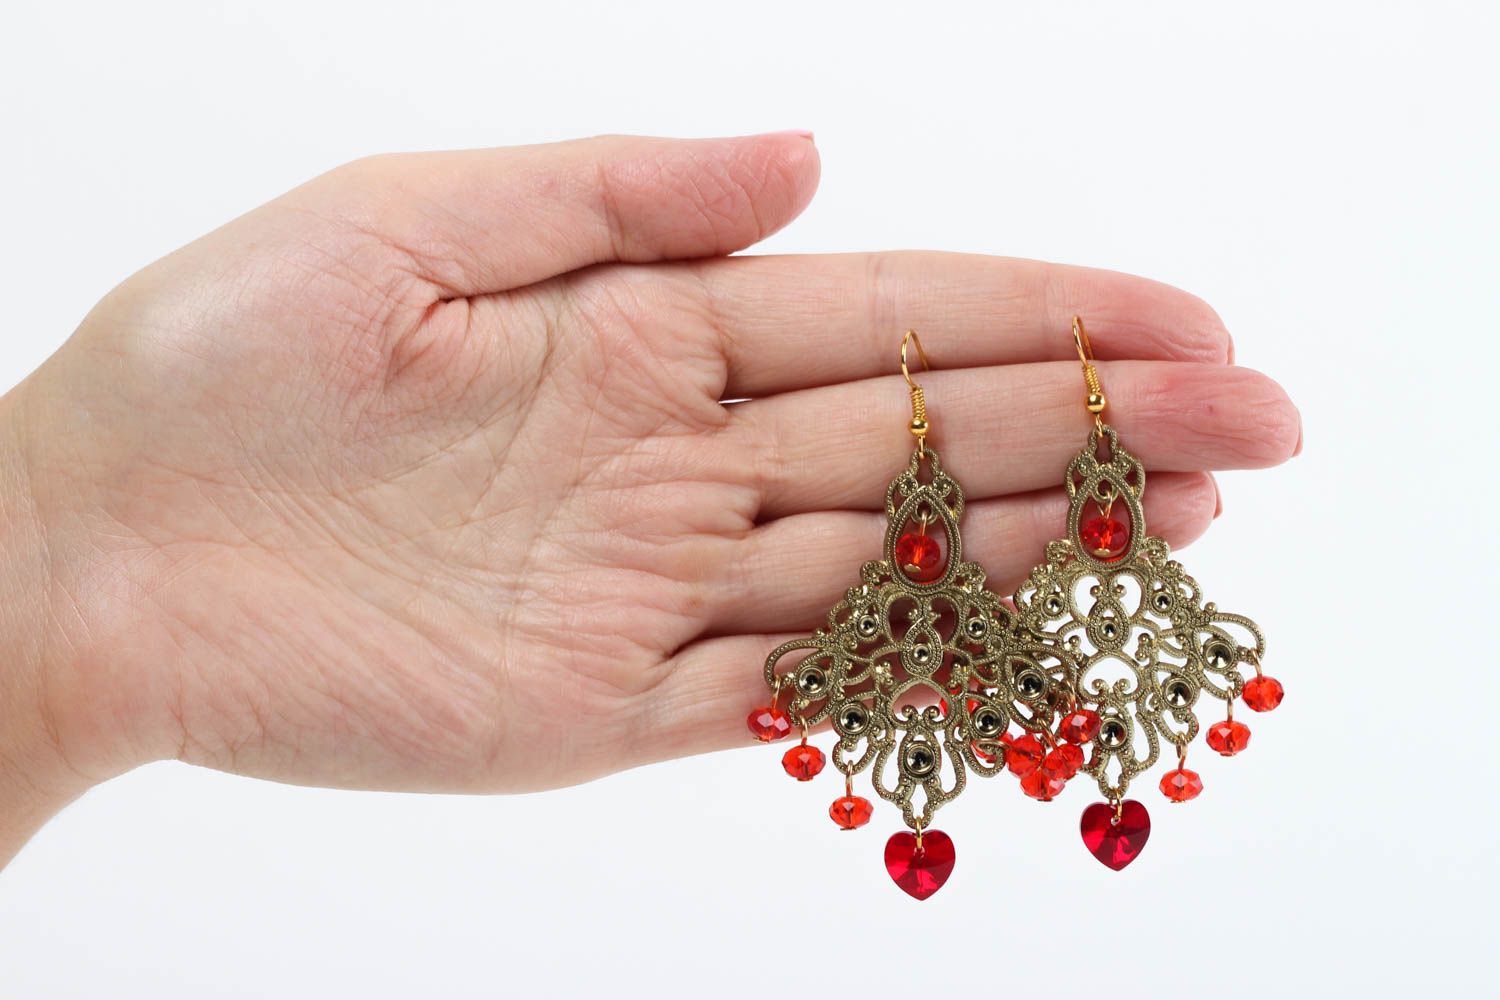 Handmade earrings designer earrings unusual gift elite jewelry gift ideas photo 5